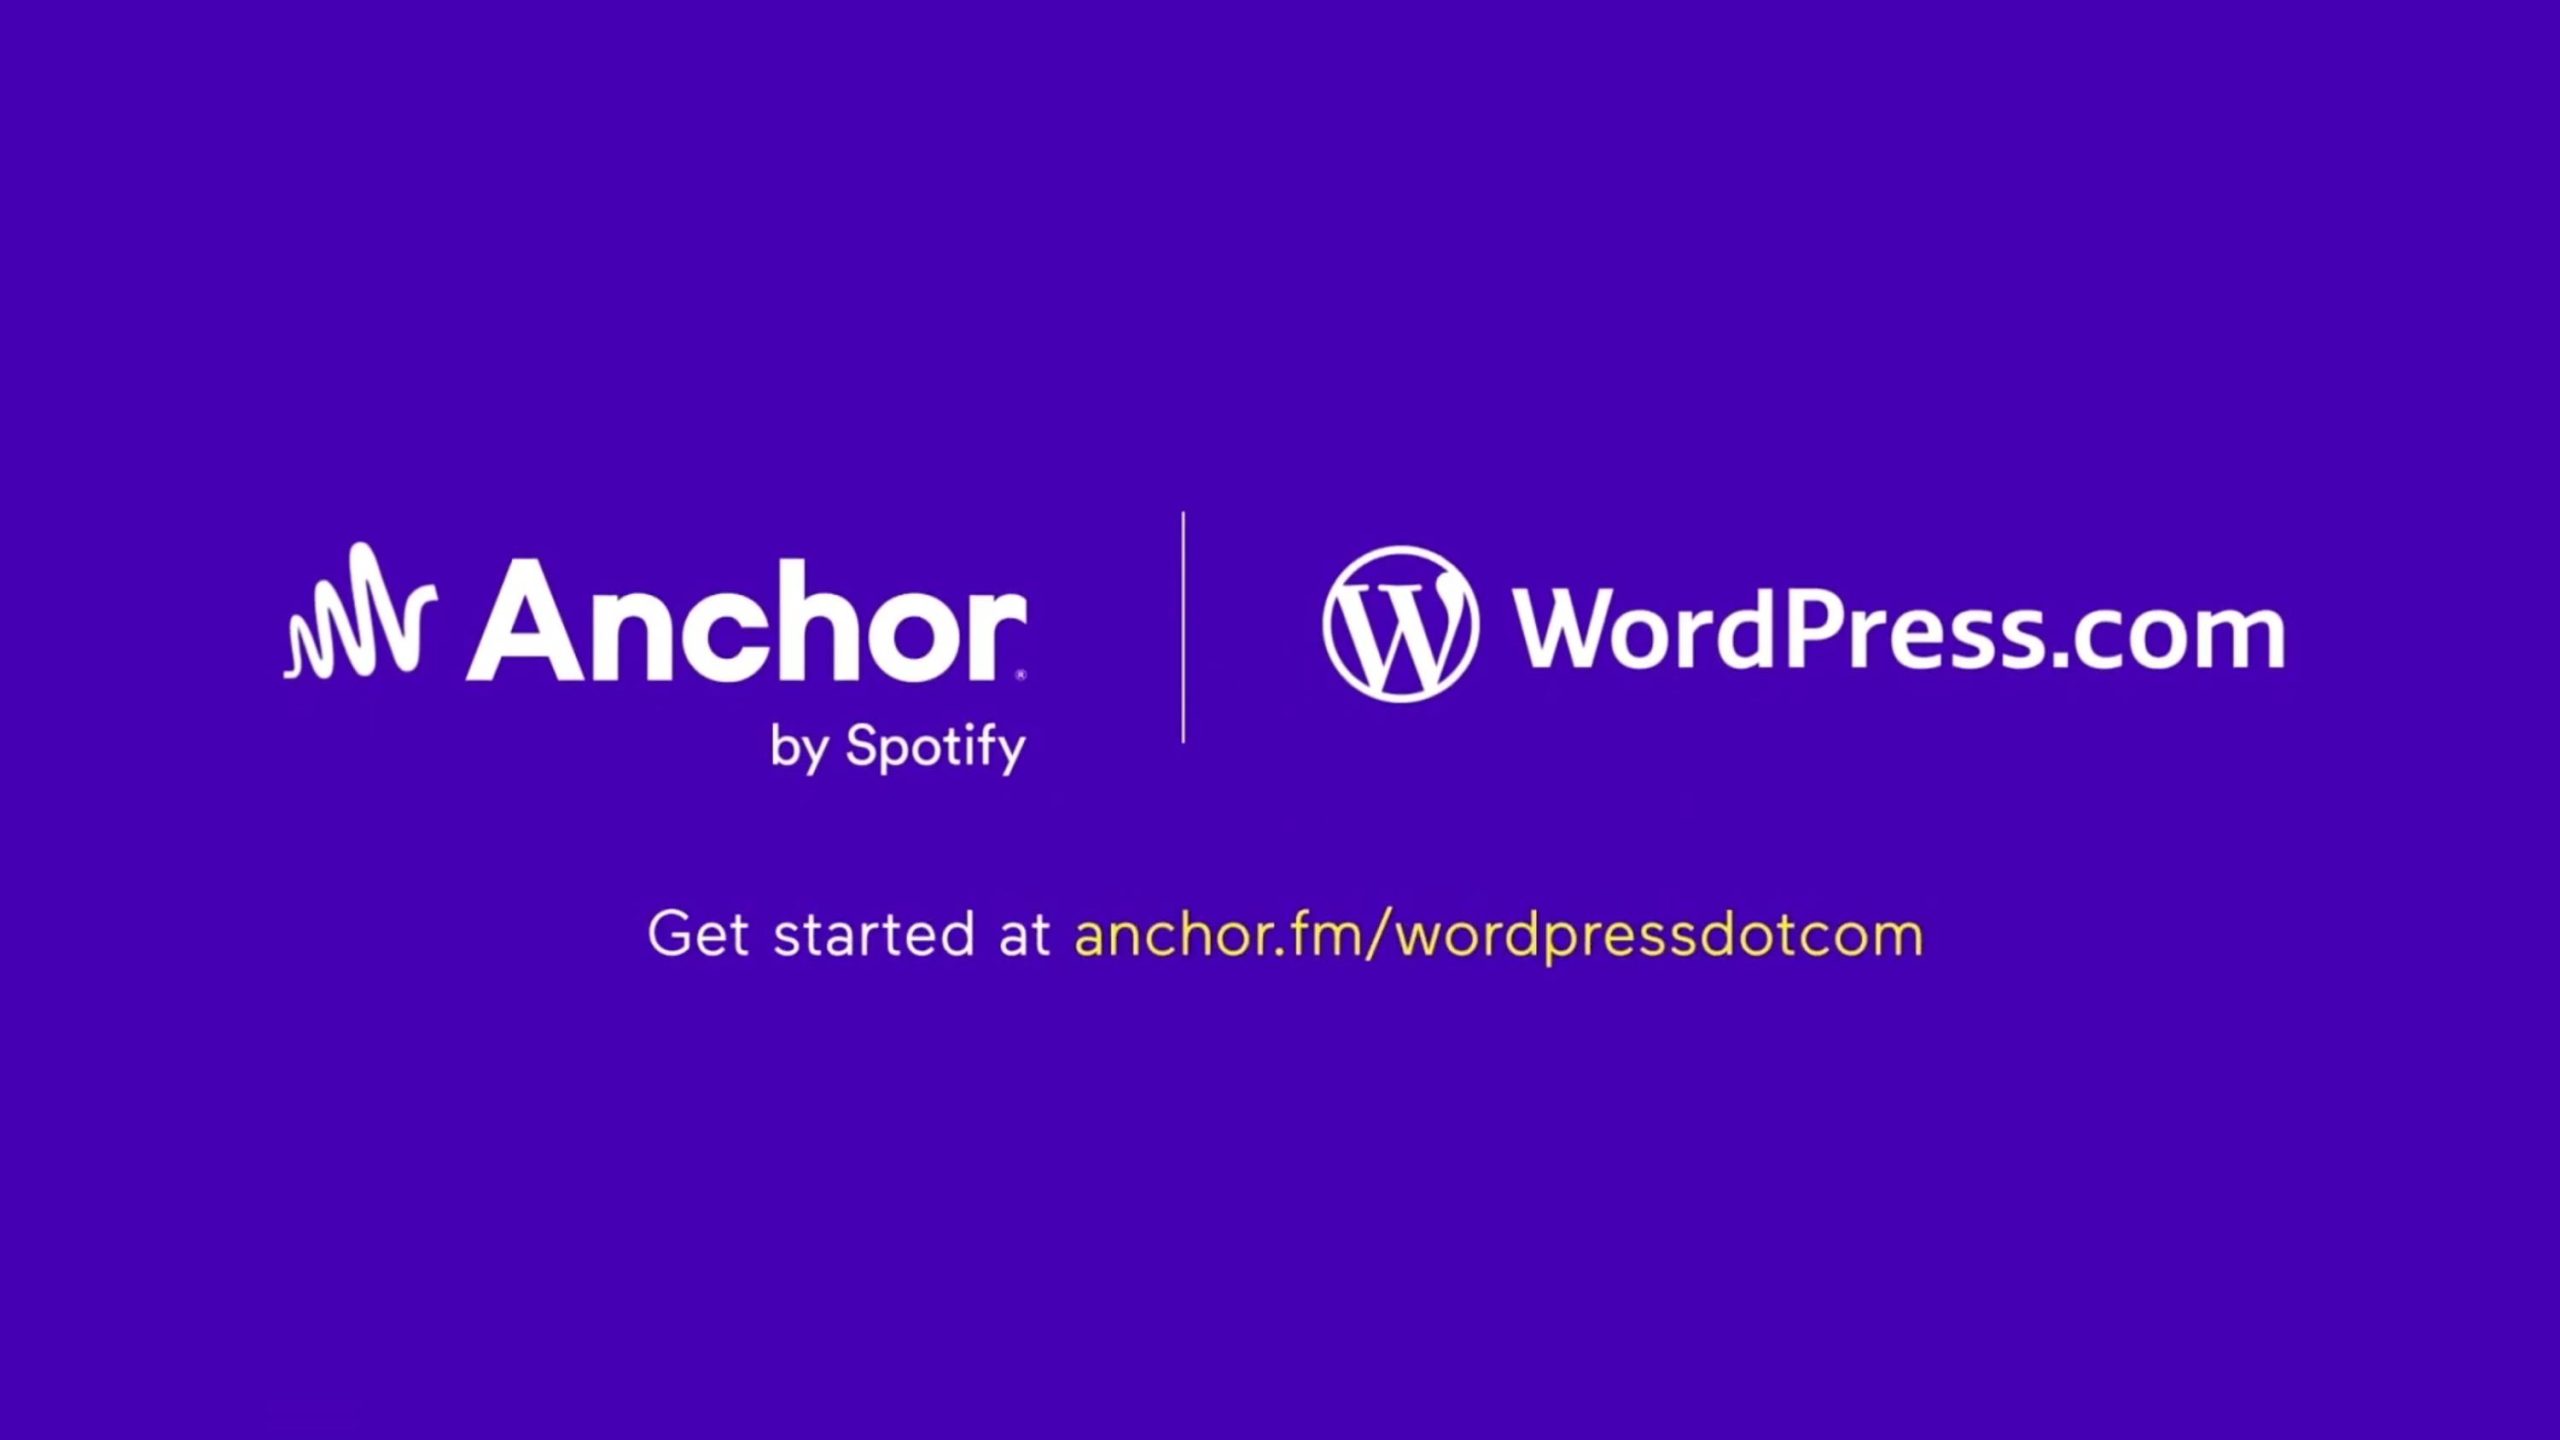 Spotify Memudahkan Penulisan Pada WordPress Ditukar Ke Bentuk Audio